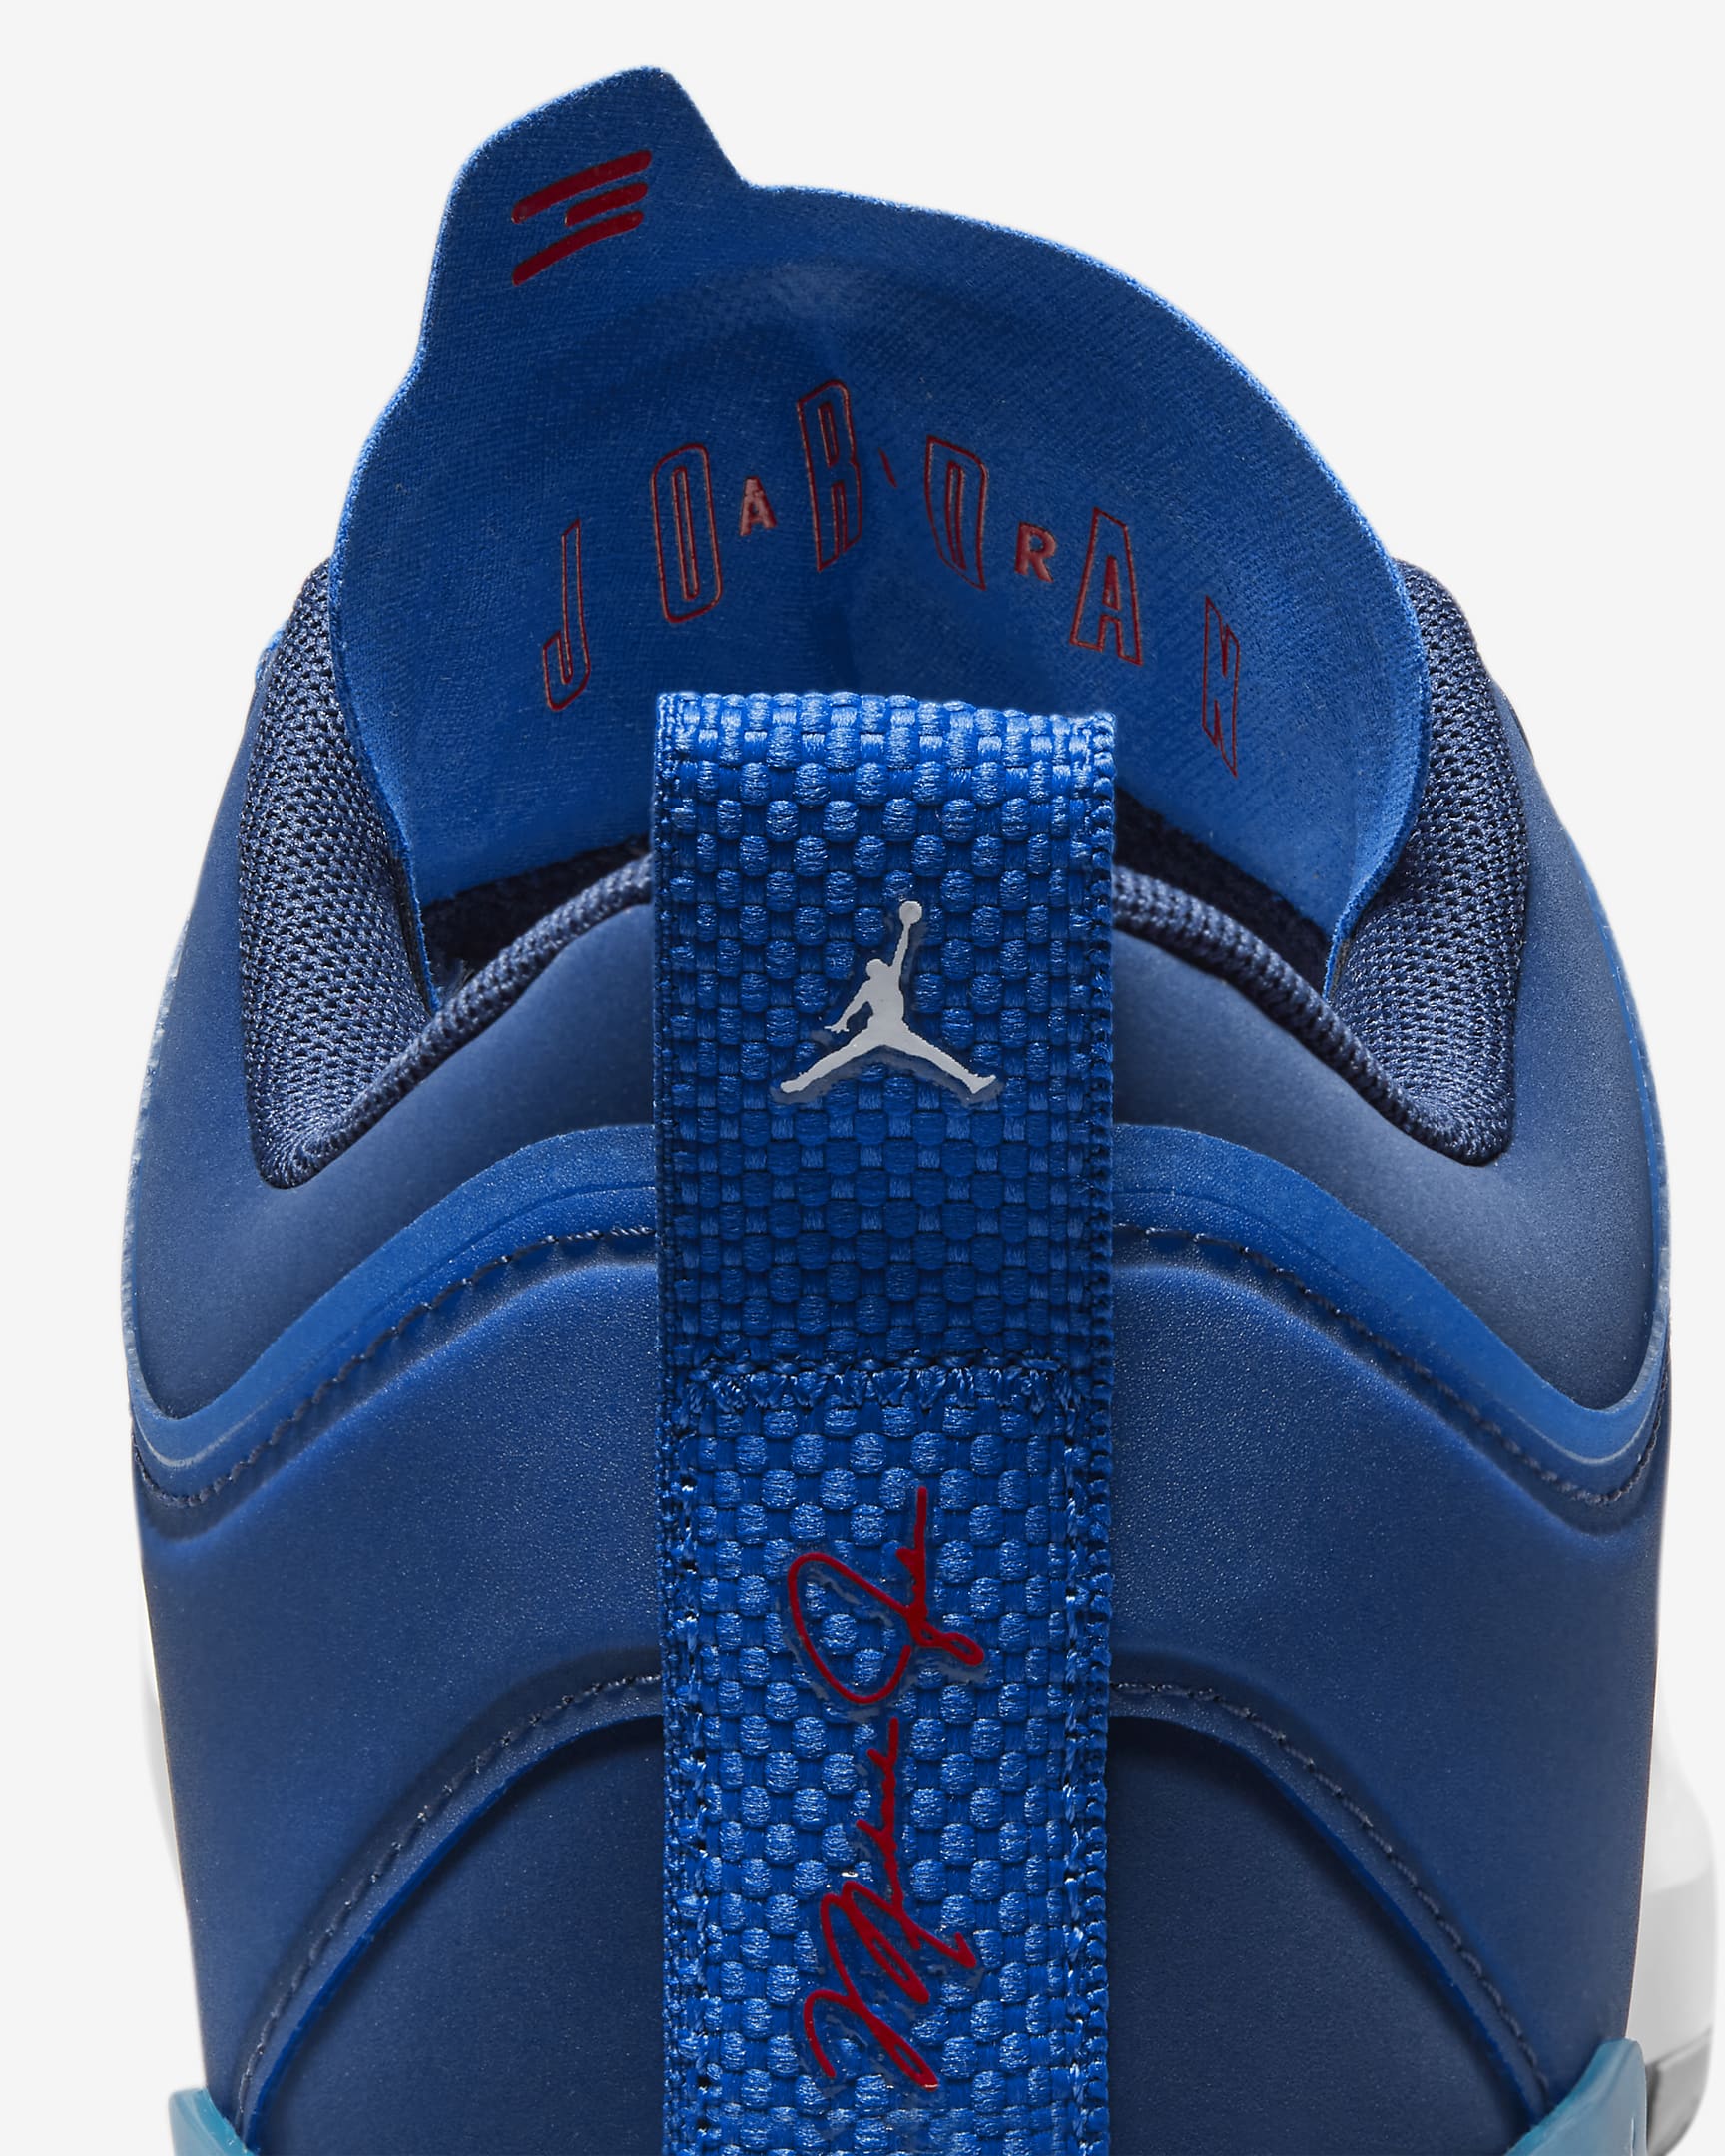 Air Jordan XXXVII Low PF Men's Basketball Shoes. Nike PH